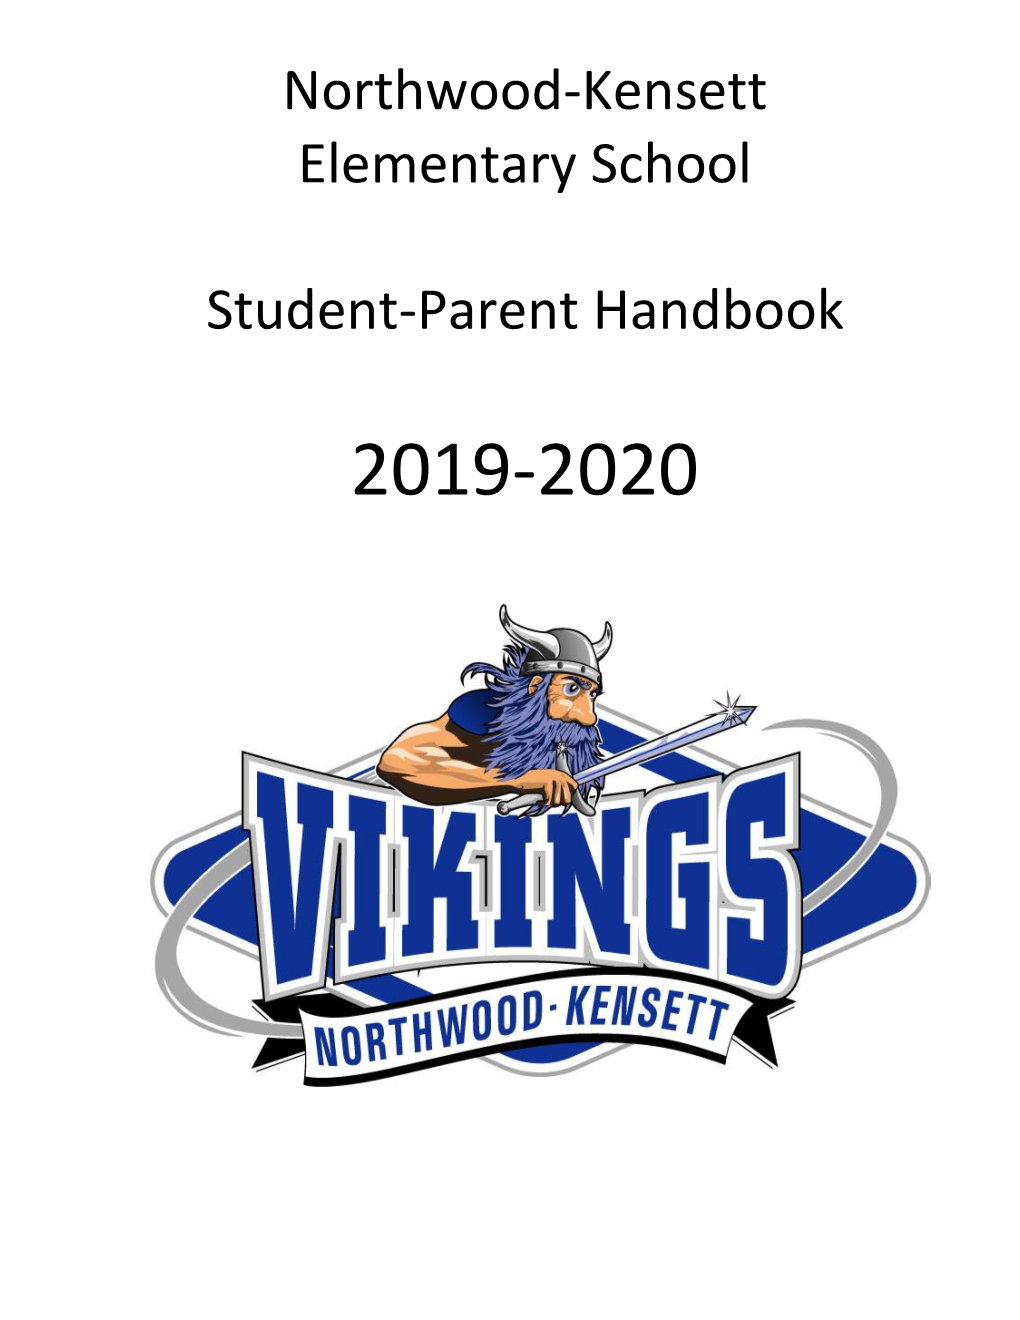 Northwood-Kensett Elementary School Student-Parent Handbook